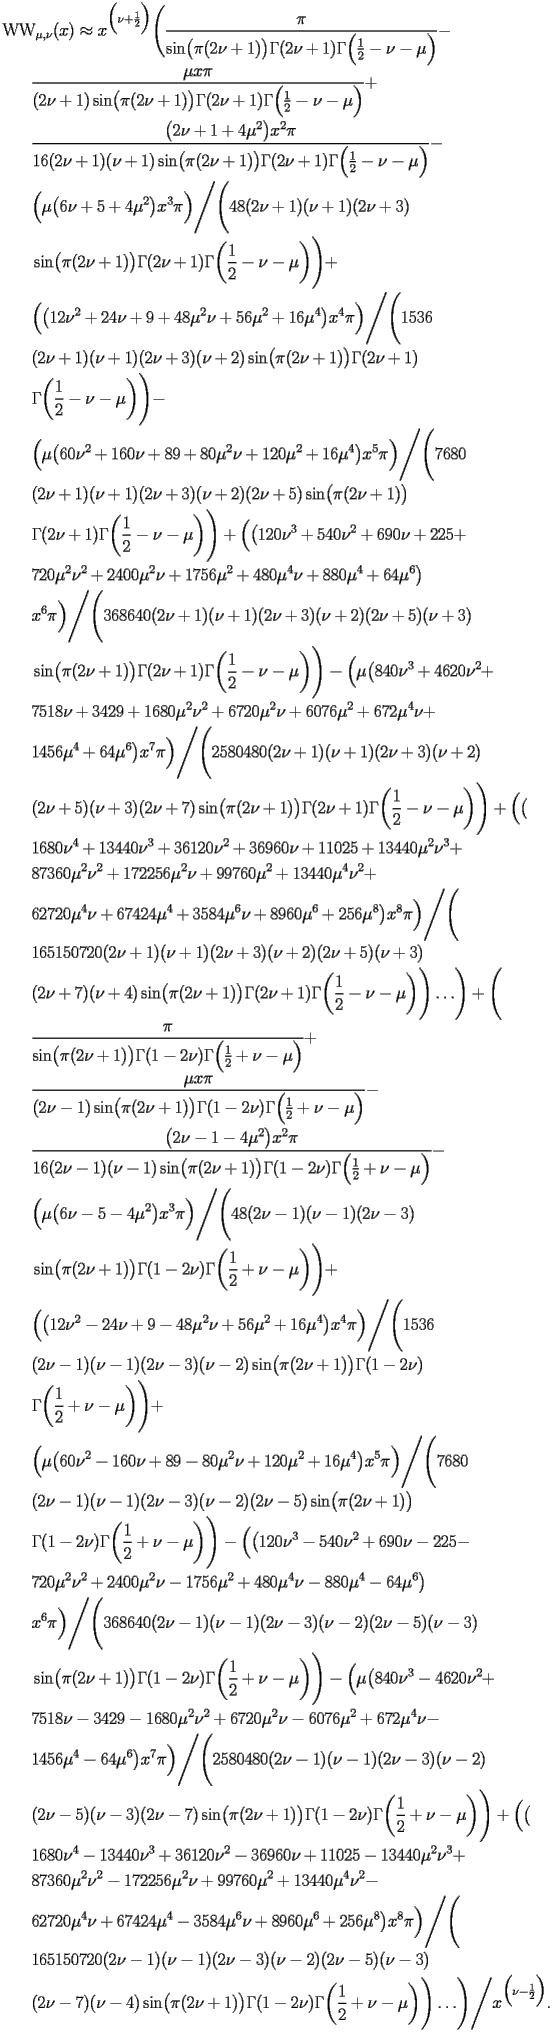 
\begin{equation*} 
\begin{split} 
& \operatorname{WW} _{\mu , \nu} (x)\approx x^{\Bigl(\nu + \frac{1}{2}\Bigr)} \Biggl(\frac{\pi}{\operatorname{sin} \bigl(\pi (2 \nu + 1)\bigr) \Gamma (2 \nu + 1) \Gamma \Bigl(\frac{1}{2} - \nu - \mu\Bigr)} -  \\ 
& \quad{}\quad{}\frac{\mu x \pi}{(2 \nu + 1) \operatorname{sin} \bigl(\pi (2 \nu + 1)\bigr) \Gamma (2 \nu + 1) \Gamma \Bigl(\frac{1}{2} - \nu - \mu\Bigr)} +  \\ 
& \quad{}\quad{}\frac{\bigl(2 \nu + 1 + 4 \mu^{2}\bigr) x^{2} \pi}{16 (2 \nu + 1) (\nu + 1) \operatorname{sin} \bigl(\pi (2 \nu + 1)\bigr) \Gamma (2 \nu + 1) \Gamma \Bigl(\frac{1}{2} - \nu - \mu\Bigr)} -  \\ 
& \quad{}\quad{}\Bigl(\mu \bigl(6 \nu + 5 + 4 \mu^{2}\bigr) x^{3} \pi\Bigr)\Bigg/\Biggl(48 (2 \nu + 1) (\nu + 1) (2 \nu + 3)  \\ 
& \quad{}\quad{}\operatorname{sin} \bigl(\pi (2 \nu + 1)\bigr) \Gamma (2 \nu + 1) \Gamma \biggl(\frac{1}{2} - \nu - \mu\biggr)\Biggr) +  \\ 
& \quad{}\quad{}\Bigl(\bigl(12 \nu^{2} + 24 \nu + 9 + 48 \mu^{2} \nu + 56 \mu^{2} + 16 \mu^{4}\bigr) x^{4} \pi\Bigr)\Bigg/\Biggl(1536  \\ 
& \quad{}\quad{}(2 \nu + 1) (\nu + 1) (2 \nu + 3) (\nu + 2) \operatorname{sin} \bigl(\pi (2 \nu + 1)\bigr) \Gamma (2 \nu + 1)  \\ 
& \quad{}\quad{}\Gamma \biggl(\frac{1}{2} - \nu - \mu\biggr)\Biggr) -  \\ 
& \quad{}\quad{}\Bigl(\mu \bigl(60 \nu^{2} + 160 \nu + 89 + 80 \mu^{2} \nu + 120 \mu^{2} + 16 \mu^{4}\bigr) x^{5} \pi\Bigr)\Bigg/\Biggl(7680  \\ 
& \quad{}\quad{}(2 \nu + 1) (\nu + 1) (2 \nu + 3) (\nu + 2) (2 \nu + 5) \operatorname{sin} \bigl(\pi (2 \nu + 1)\bigr)  \\ 
& \quad{}\quad{}\Gamma (2 \nu + 1) \Gamma \biggl(\frac{1}{2} - \nu - \mu\biggr)\Biggr) + \Bigl(\bigl(120 \nu^{3} + 540 \nu^{2} + 690 \nu + 225 +  \\ 
& \quad{}\quad{}720 \mu^{2} \nu^{2} + 2400 \mu^{2} \nu + 1756 \mu^{2} + 480 \mu^{4} \nu + 880 \mu^{4} + 64 \mu^{6}\bigr)  \\ 
& \quad{}\quad{}x^{6} \pi\Bigr)\Bigg/\Biggl(368640 (2 \nu + 1) (\nu + 1) (2 \nu + 3) (\nu + 2) (2 \nu + 5) (\nu + 3)  \\ 
& \quad{}\quad{}\operatorname{sin} \bigl(\pi (2 \nu + 1)\bigr) \Gamma (2 \nu + 1) \Gamma \biggl(\frac{1}{2} - \nu - \mu\biggr)\Biggr) - \Bigl(\mu \bigl(840 \nu^{3} + 4620 \nu^{2} +  \\ 
& \quad{}\quad{}7518 \nu + 3429 + 1680 \mu^{2} \nu^{2} + 6720 \mu^{2} \nu + 6076 \mu^{2} + 672 \mu^{4} \nu +  \\ 
& \quad{}\quad{}1456 \mu^{4} + 64 \mu^{6}\bigr) x^{7} \pi\Bigr)\Bigg/\Biggl(2580480 (2 \nu + 1) (\nu + 1) (2 \nu + 3) (\nu + 2) \\ 
& \quad{}\quad{} (2 \nu + 5) (\nu + 3) (2 \nu + 7) \operatorname{sin} \bigl(\pi (2 \nu + 1)\bigr) \Gamma (2 \nu + 1) \Gamma \biggl(\frac{1}{2} - \nu - \mu\biggr)\Biggr) + \Bigl(\bigl( \\ 
& \quad{}\quad{}1680 \nu^{4} + 13440 \nu^{3} + 36120 \nu^{2} + 36960 \nu + 11025 + 13440 \mu^{2} \nu^{3} +  \\ 
& \quad{}\quad{}87360 \mu^{2} \nu^{2} + 172256 \mu^{2} \nu + 99760 \mu^{2} + 13440 \mu^{4} \nu^{2} +  \\ 
& \quad{}\quad{}62720 \mu^{4} \nu + 67424 \mu^{4} + 3584 \mu^{6} \nu + 8960 \mu^{6} + 256 \mu^{8}\bigr) x^{8} \pi\Bigr)\Bigg/\Biggl( \\ 
& \quad{}\quad{}165150720 (2 \nu + 1) (\nu + 1) (2 \nu + 3) (\nu + 2) (2 \nu + 5) (\nu + 3)  \\ 
& \quad{}\quad{}(2 \nu + 7) (\nu + 4) \operatorname{sin} \bigl(\pi (2 \nu + 1)\bigr) \Gamma (2 \nu + 1) \Gamma \biggl(\frac{1}{2} - \nu - \mu\biggr)\Biggr)\ldots\Biggr) + \Biggl( \\ 
& \quad{}\quad{}\frac{\pi}{\operatorname{sin} \bigl(\pi (2 \nu + 1)\bigr) \Gamma (1 - 2 \nu) \Gamma \Bigl(\frac{1}{2} + \nu - \mu\Bigr)} +  \\ 
& \quad{}\quad{}\frac{\mu x \pi}{(2 \nu - 1) \operatorname{sin} \bigl(\pi (2 \nu + 1)\bigr) \Gamma (1 - 2 \nu) \Gamma \Bigl(\frac{1}{2} + \nu - \mu\Bigr)} -  \\ 
& \quad{}\quad{}\frac{\bigl(2 \nu - 1 - 4 \mu^{2}\bigr) x^{2} \pi}{16 (2 \nu - 1) (\nu - 1) \operatorname{sin} \bigl(\pi (2 \nu + 1)\bigr) \Gamma (1 - 2 \nu) \Gamma \Bigl(\frac{1}{2} + \nu - \mu\Bigr)} -  \\ 
& \quad{}\quad{}\Bigl(\mu \bigl(6 \nu - 5 - 4 \mu^{2}\bigr) x^{3} \pi\Bigr)\Bigg/\Biggl(48 (2 \nu - 1) (\nu - 1) (2 \nu - 3)  \\ 
& \quad{}\quad{}\operatorname{sin} \bigl(\pi (2 \nu + 1)\bigr) \Gamma (1 - 2 \nu) \Gamma \biggl(\frac{1}{2} + \nu - \mu\biggr)\Biggr) +  \\ 
& \quad{}\quad{}\Bigl(\bigl(12 \nu^{2} - 24 \nu + 9 - 48 \mu^{2} \nu + 56 \mu^{2} + 16 \mu^{4}\bigr) x^{4} \pi\Bigr)\Bigg/\Biggl(1536  \\ 
& \quad{}\quad{}(2 \nu - 1) (\nu - 1) (2 \nu - 3) (\nu - 2) \operatorname{sin} \bigl(\pi (2 \nu + 1)\bigr) \Gamma (1 - 2 \nu)  \\ 
& \quad{}\quad{}\Gamma \biggl(\frac{1}{2} + \nu - \mu\biggr)\Biggr) +  \\ 
& \quad{}\quad{}\Bigl(\mu \bigl(60 \nu^{2} - 160 \nu + 89 - 80 \mu^{2} \nu + 120 \mu^{2} + 16 \mu^{4}\bigr) x^{5} \pi\Bigr)\Bigg/\Biggl(7680  \\ 
& \quad{}\quad{}(2 \nu - 1) (\nu - 1) (2 \nu - 3) (\nu - 2) (2 \nu - 5) \operatorname{sin} \bigl(\pi (2 \nu + 1)\bigr)  \\ 
& \quad{}\quad{}\Gamma (1 - 2 \nu) \Gamma \biggl(\frac{1}{2} + \nu - \mu\biggr)\Biggr) - \Bigl(\bigl(120 \nu^{3} - 540 \nu^{2} + 690 \nu - 225 -  \\ 
& \quad{}\quad{}720 \mu^{2} \nu^{2} + 2400 \mu^{2} \nu - 1756 \mu^{2} + 480 \mu^{4} \nu - 880 \mu^{4} - 64 \mu^{6}\bigr)  \\ 
& \quad{}\quad{}x^{6} \pi\Bigr)\Bigg/\Biggl(368640 (2 \nu - 1) (\nu - 1) (2 \nu - 3) (\nu - 2) (2 \nu - 5) (\nu - 3)  \\ 
& \quad{}\quad{}\operatorname{sin} \bigl(\pi (2 \nu + 1)\bigr) \Gamma (1 - 2 \nu) \Gamma \biggl(\frac{1}{2} + \nu - \mu\biggr)\Biggr) - \Bigl(\mu \bigl(840 \nu^{3} - 4620 \nu^{2} +  \\ 
& \quad{}\quad{}7518 \nu - 3429 - 1680 \mu^{2} \nu^{2} + 6720 \mu^{2} \nu - 6076 \mu^{2} + 672 \mu^{4} \nu -  \\ 
& \quad{}\quad{}1456 \mu^{4} - 64 \mu^{6}\bigr) x^{7} \pi\Bigr)\Bigg/\Biggl(2580480 (2 \nu - 1) (\nu - 1) (2 \nu - 3) (\nu - 2) \\ 
& \quad{}\quad{} (2 \nu - 5) (\nu - 3) (2 \nu - 7) \operatorname{sin} \bigl(\pi (2 \nu + 1)\bigr) \Gamma (1 - 2 \nu) \Gamma \biggl(\frac{1}{2} + \nu - \mu\biggr)\Biggr) + \Bigl(\bigl( \\ 
& \quad{}\quad{}1680 \nu^{4} - 13440 \nu^{3} + 36120 \nu^{2} - 36960 \nu + 11025 - 13440 \mu^{2} \nu^{3} +  \\ 
& \quad{}\quad{}87360 \mu^{2} \nu^{2} - 172256 \mu^{2} \nu + 99760 \mu^{2} + 13440 \mu^{4} \nu^{2} -  \\ 
& \quad{}\quad{}62720 \mu^{4} \nu + 67424 \mu^{4} - 3584 \mu^{6} \nu + 8960 \mu^{6} + 256 \mu^{8}\bigr) x^{8} \pi\Bigr)\Bigg/\Biggl( \\ 
& \quad{}\quad{}165150720 (2 \nu - 1) (\nu - 1) (2 \nu - 3) (\nu - 2) (2 \nu - 5) (\nu - 3)  \\ 
& \quad{}\quad{}(2 \nu - 7) (\nu - 4) \operatorname{sin} \bigl(\pi (2 \nu + 1)\bigr) \Gamma (1 - 2 \nu) \Gamma \biggl(\frac{1}{2} + \nu - \mu\biggr)\Biggr)\ldots\Biggr)\Bigg/x^{\Bigl(\nu - \frac{1}{2}\Bigr)}. 
\end{split} 
\end{equation*} 
 